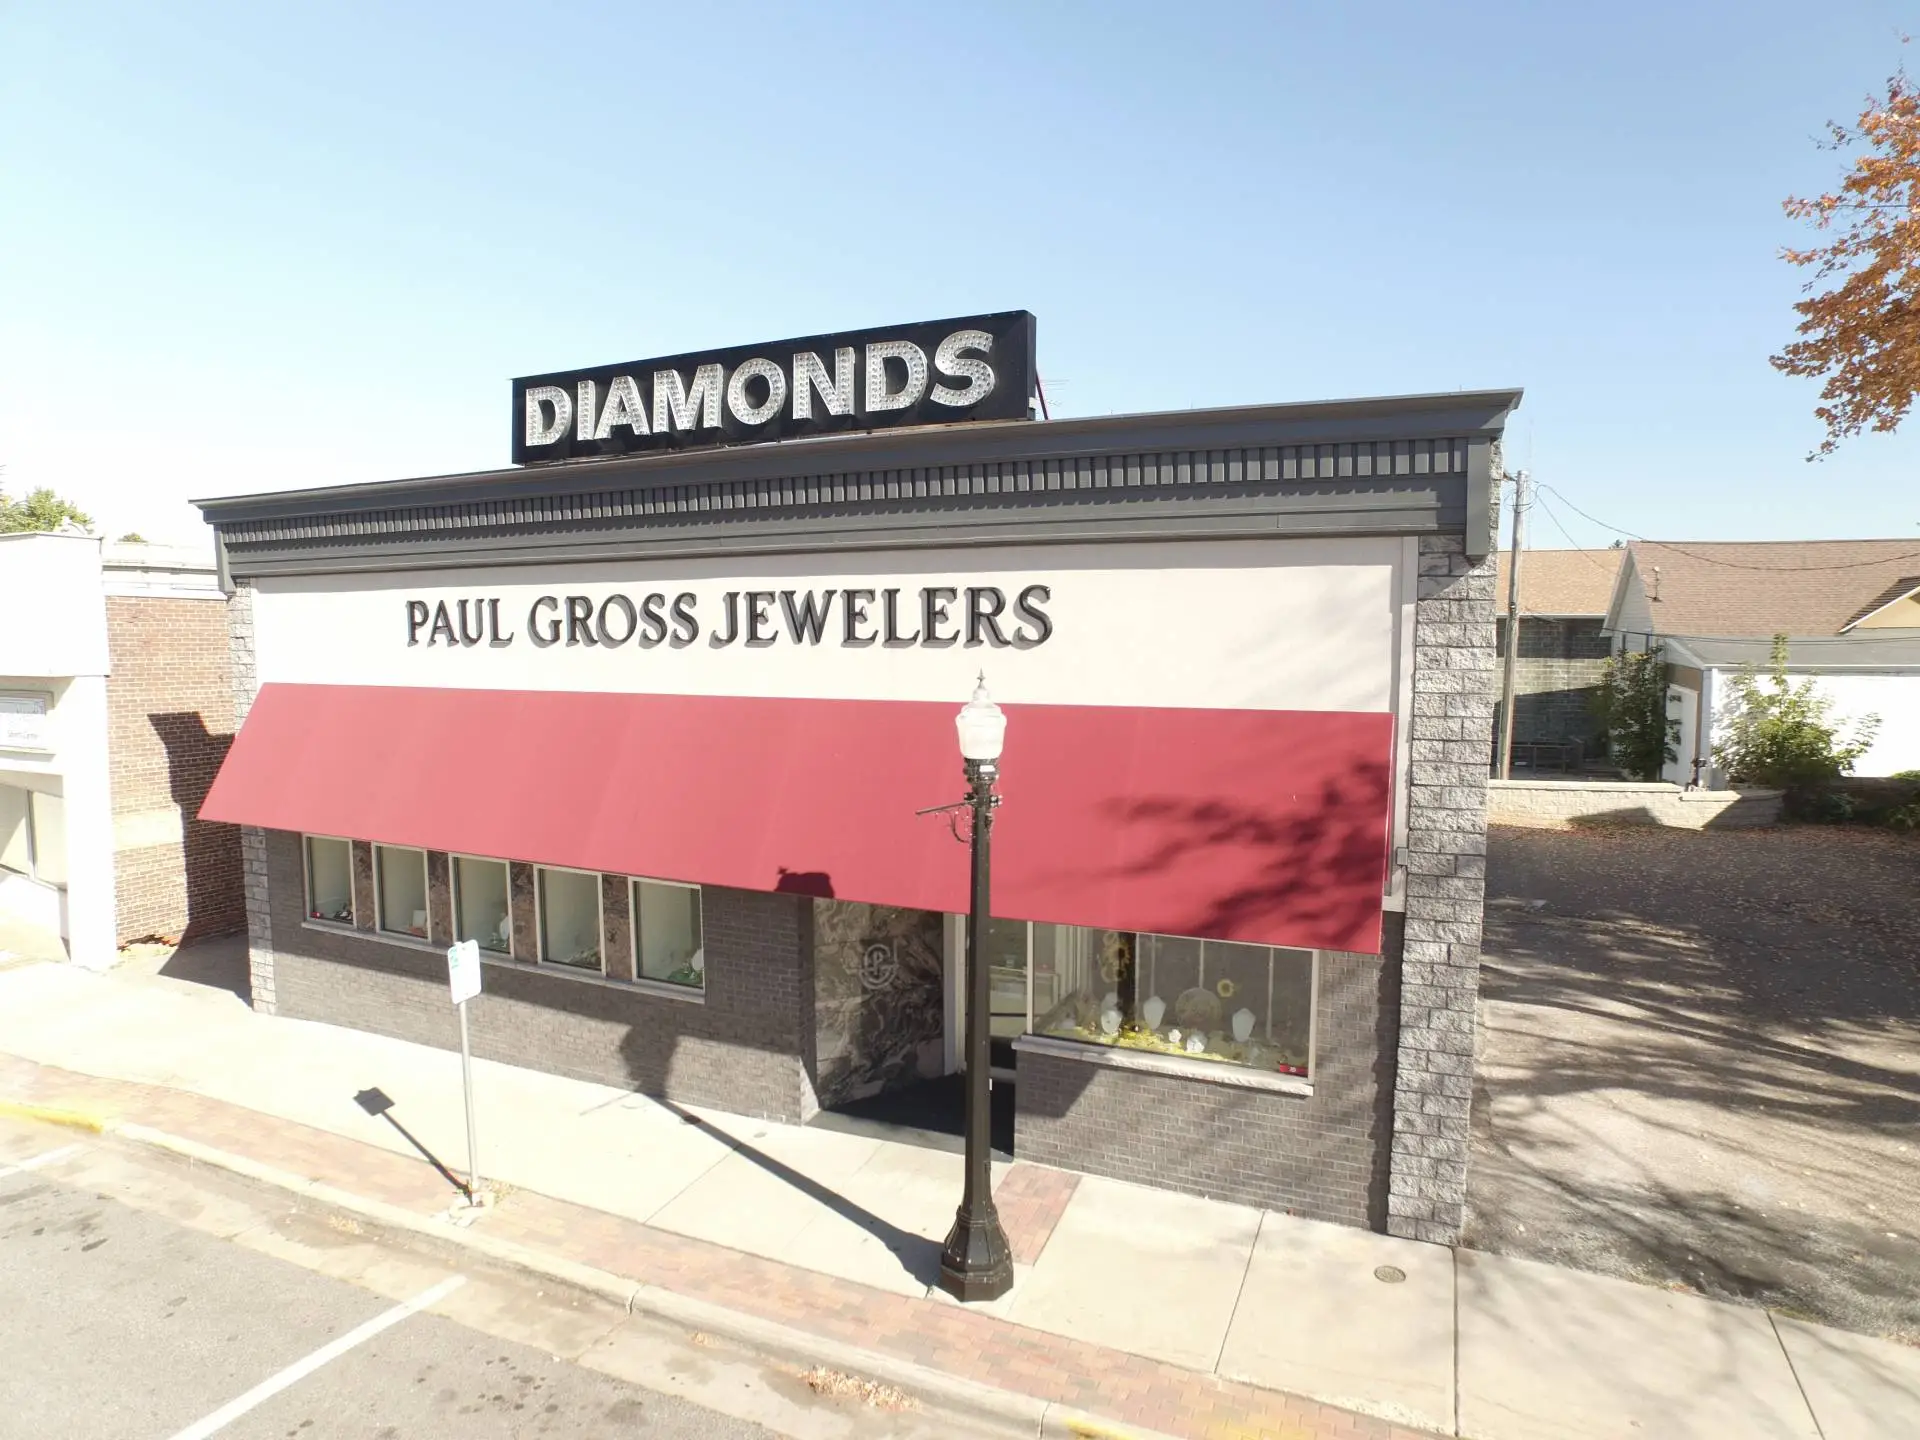 Paul Gross Jewelers